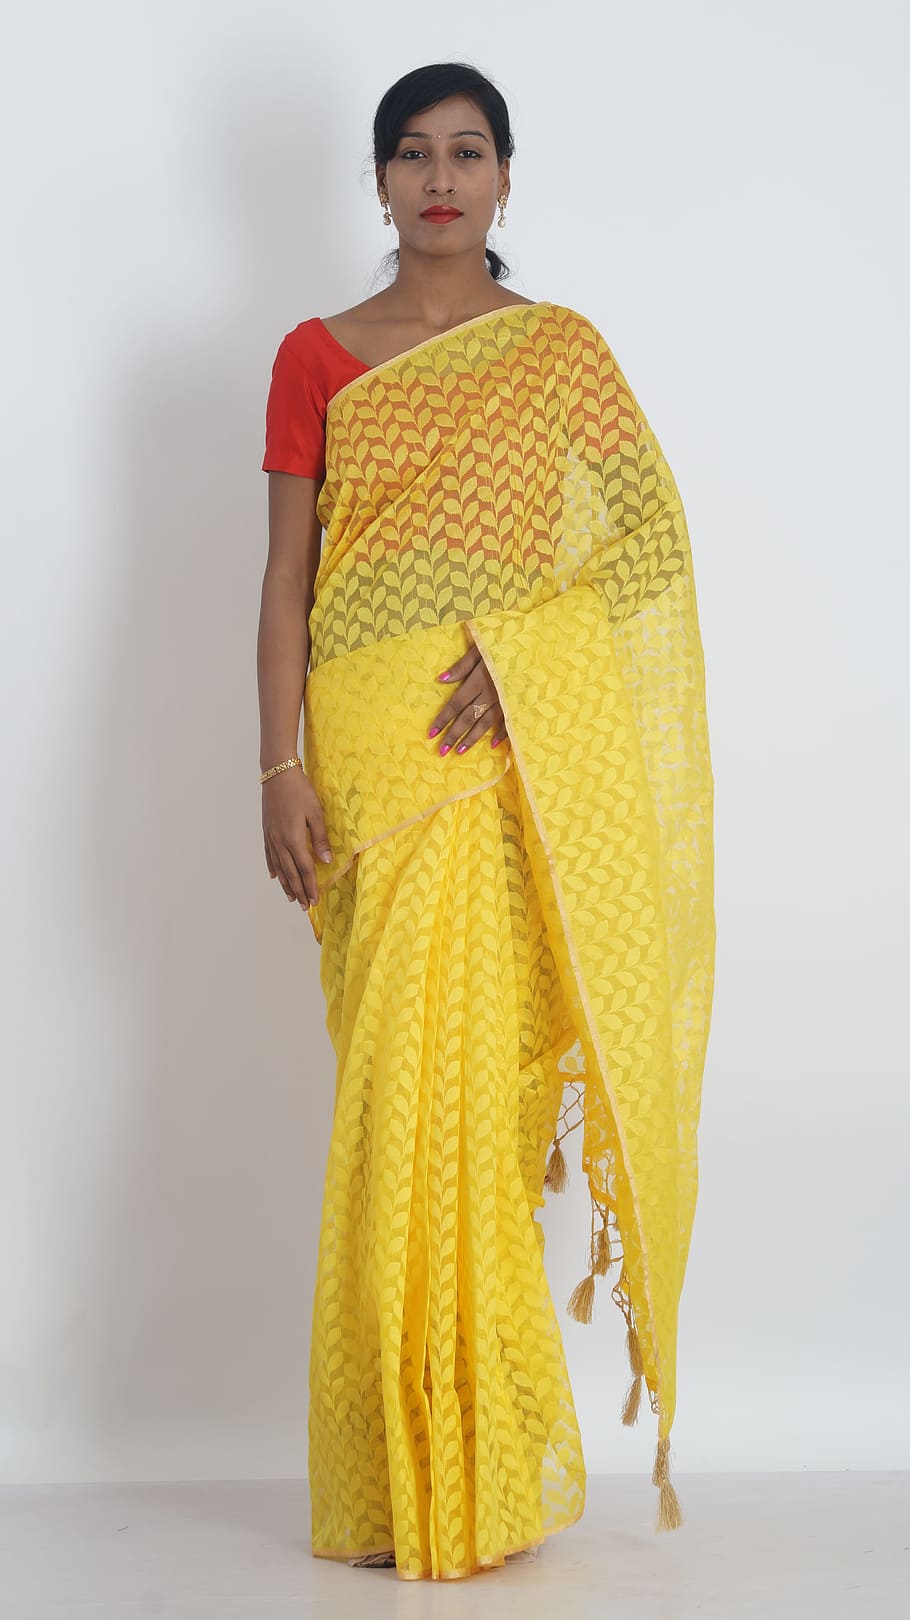 Sarees, Warna Kuning, Saris, Womens, Kenakan, sari warna kuning, pakaian wanita, pakaian India, tradisional, kuning